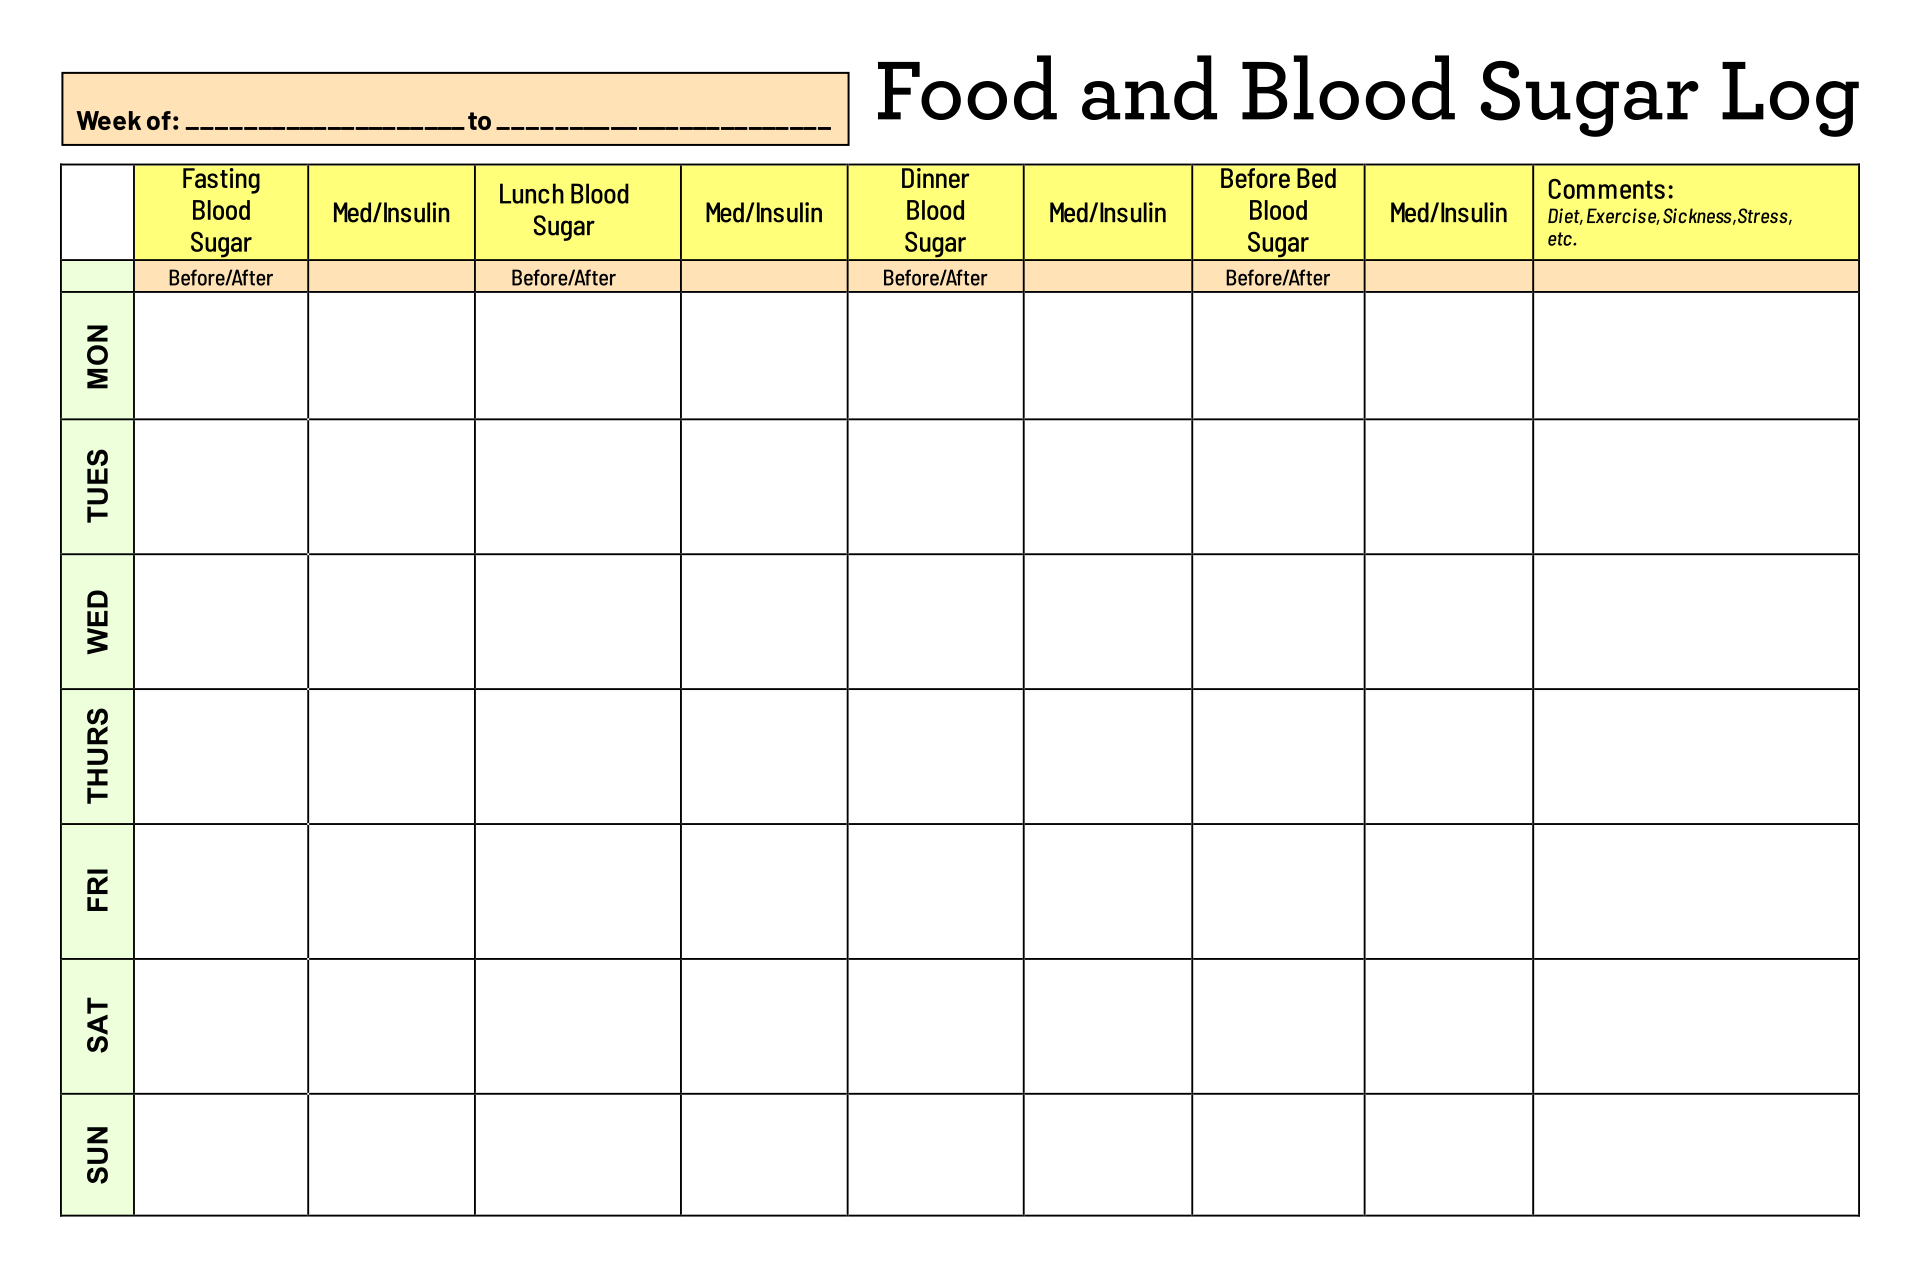 Food and Blood Sugar Log